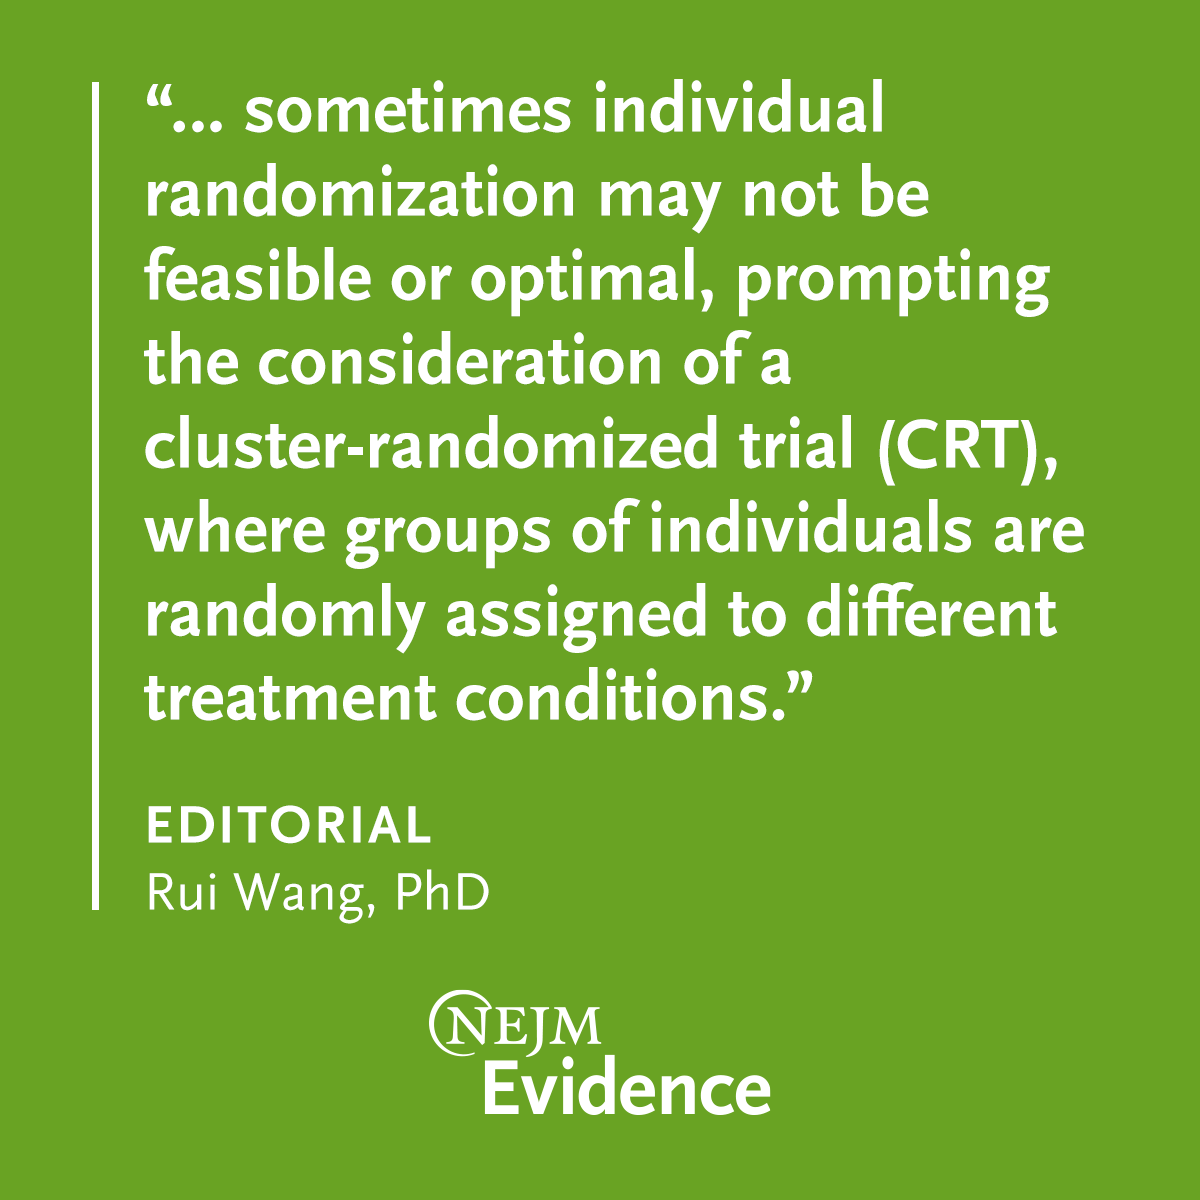 Editorial: “Choosing the Unit of Randomization – Individual or Cluster?” by Rui Wang, PhD eviden.cc/4aoEpsJ